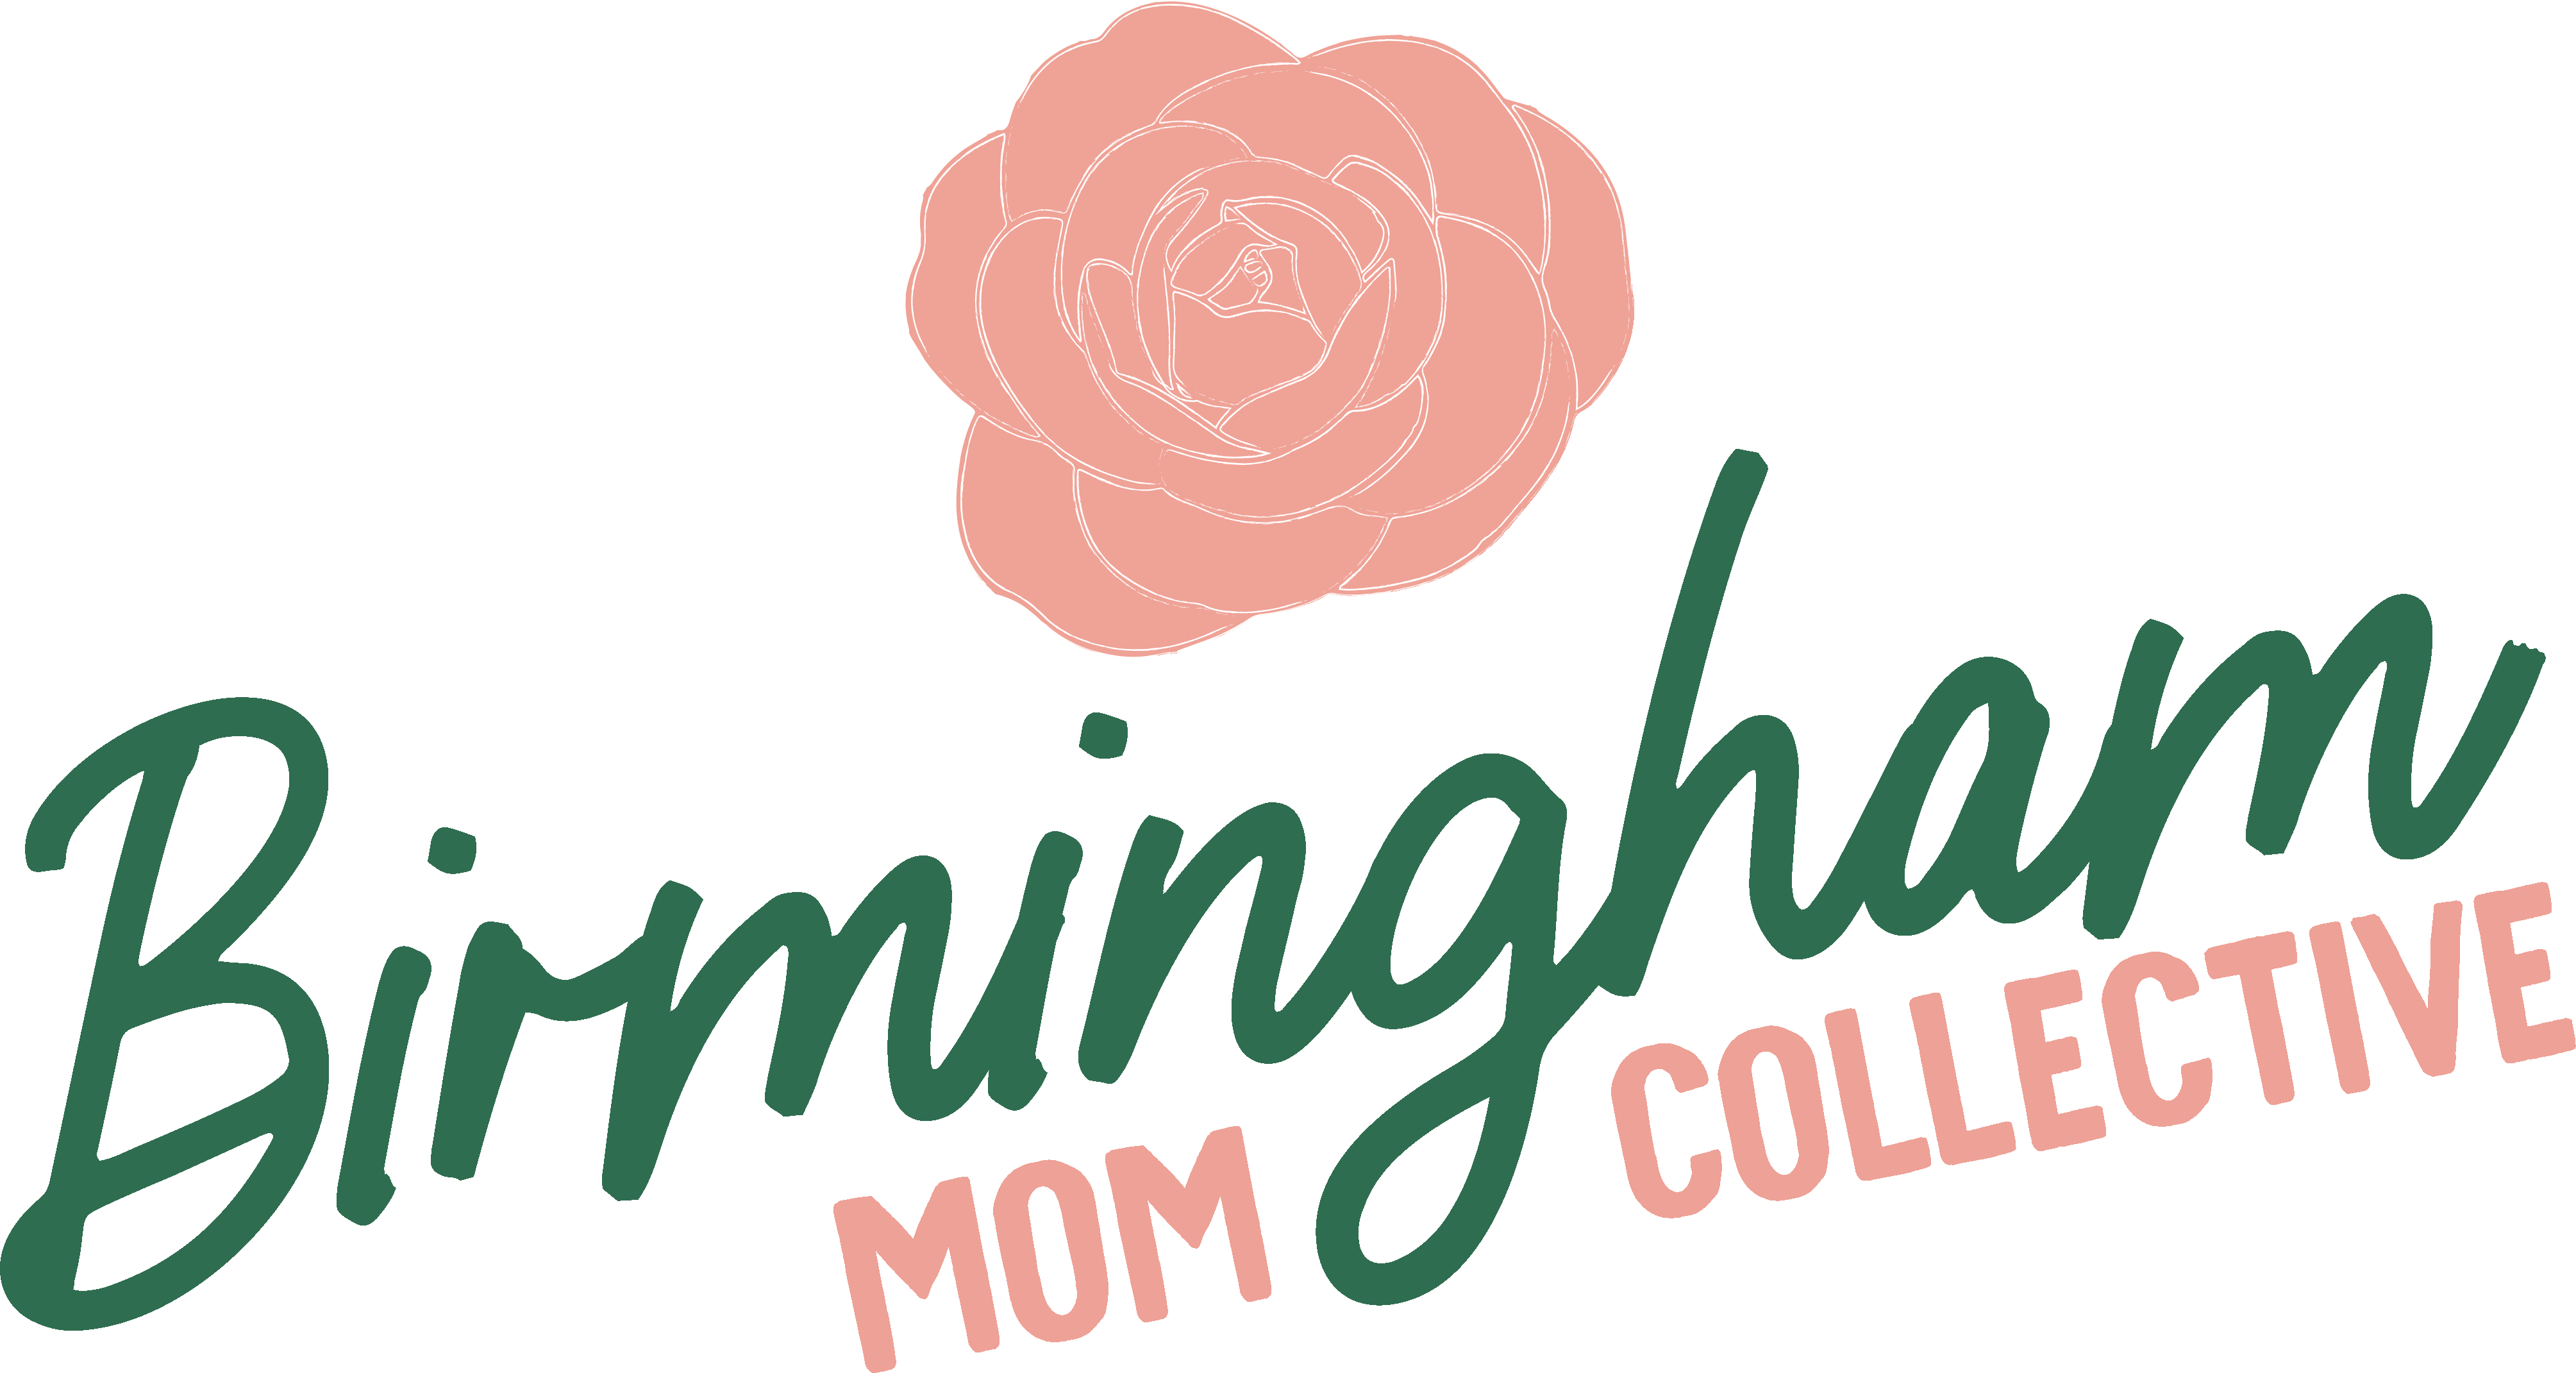 Birmingham Mom Collective